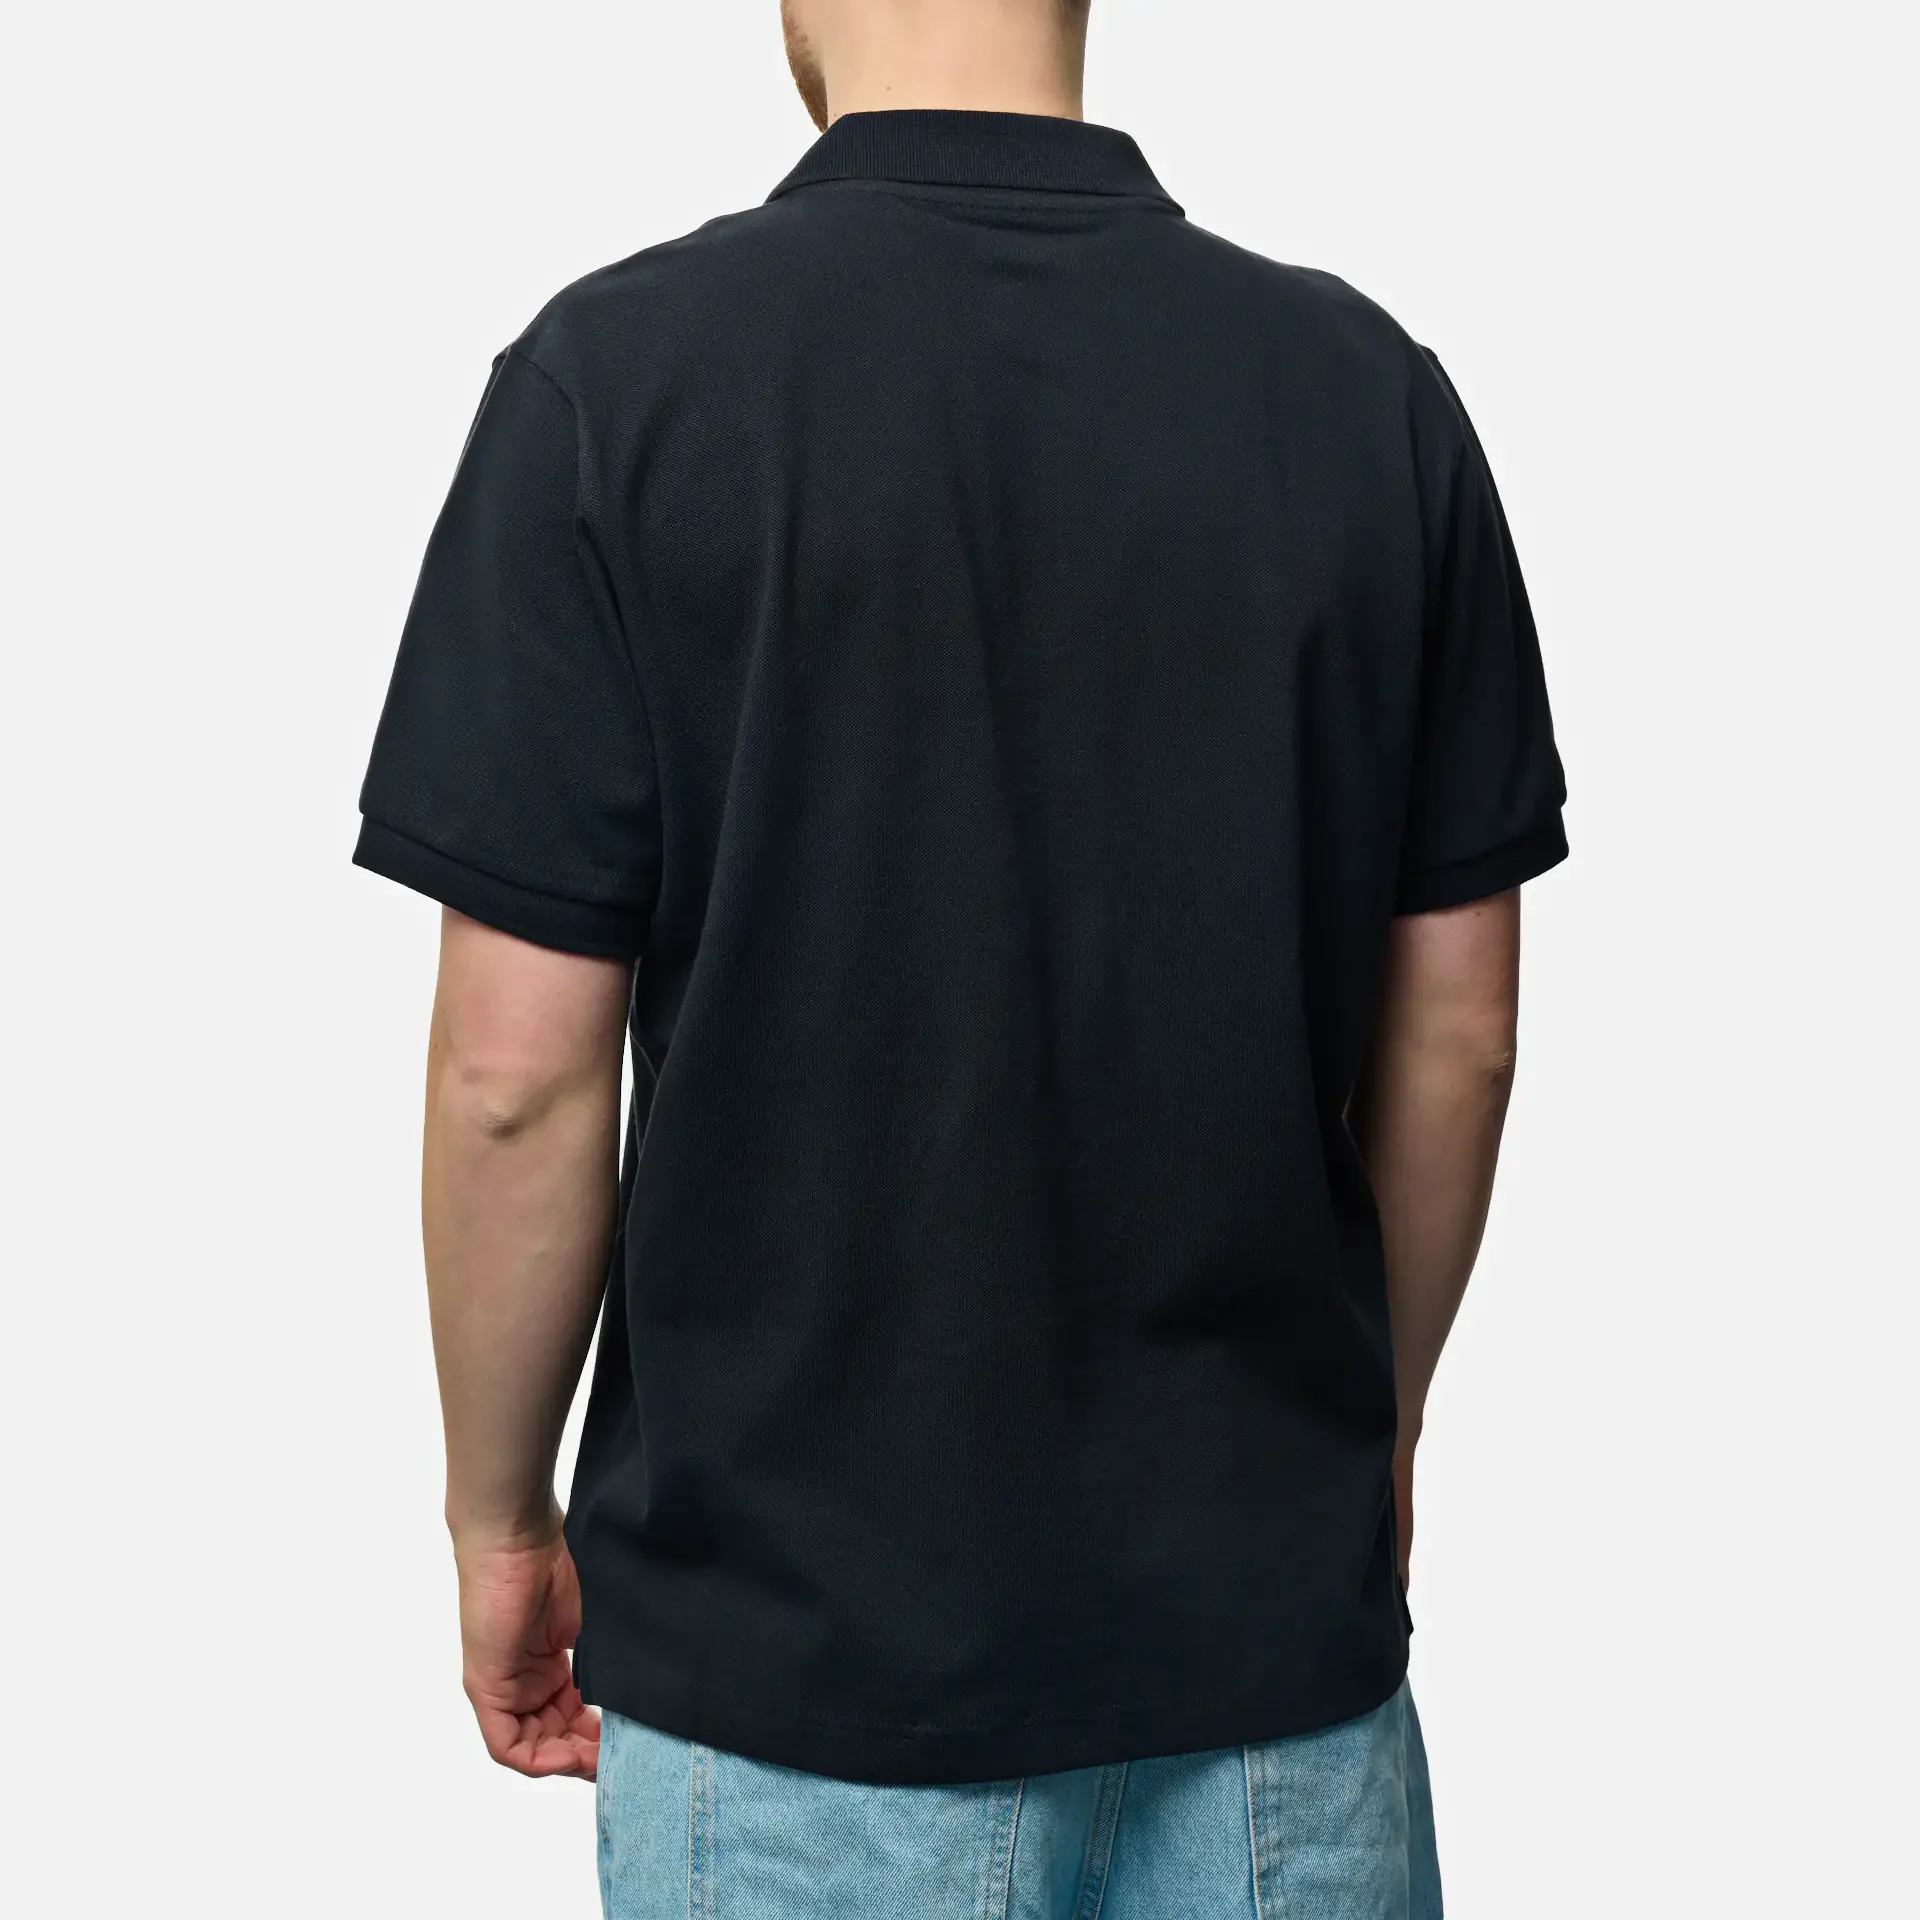 New Balance Cotton Polo Shirt Black